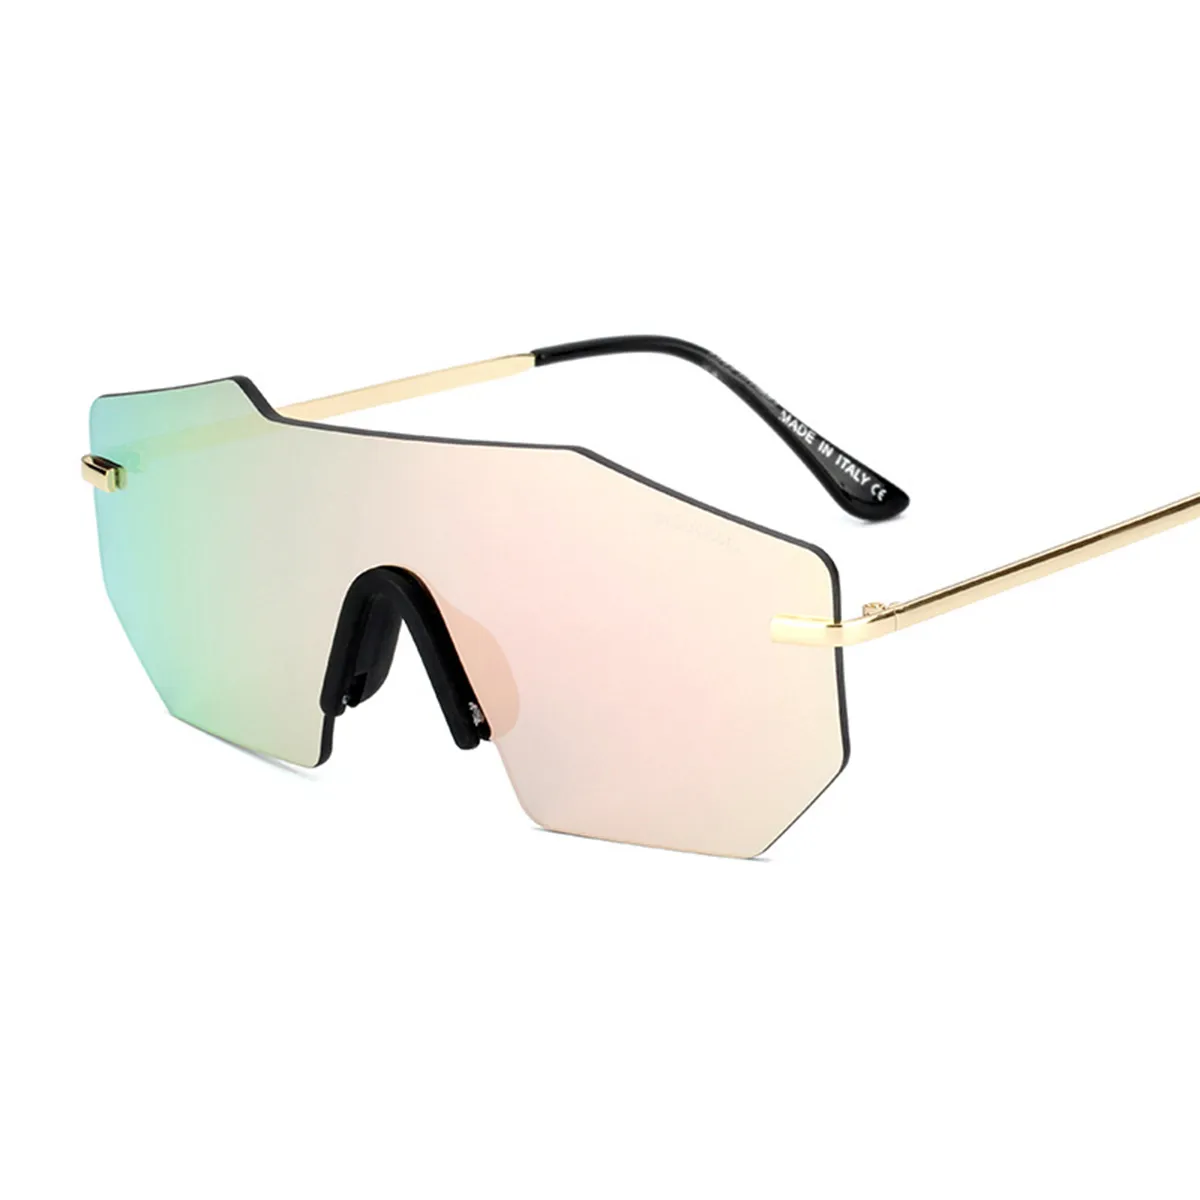 Zomer nieuwste stijl alleen zonnebril 7 kleuren zonnebril mannen fiets glas mooie sport zonnebril verblinden kleur glazen A +++ gratis verzending